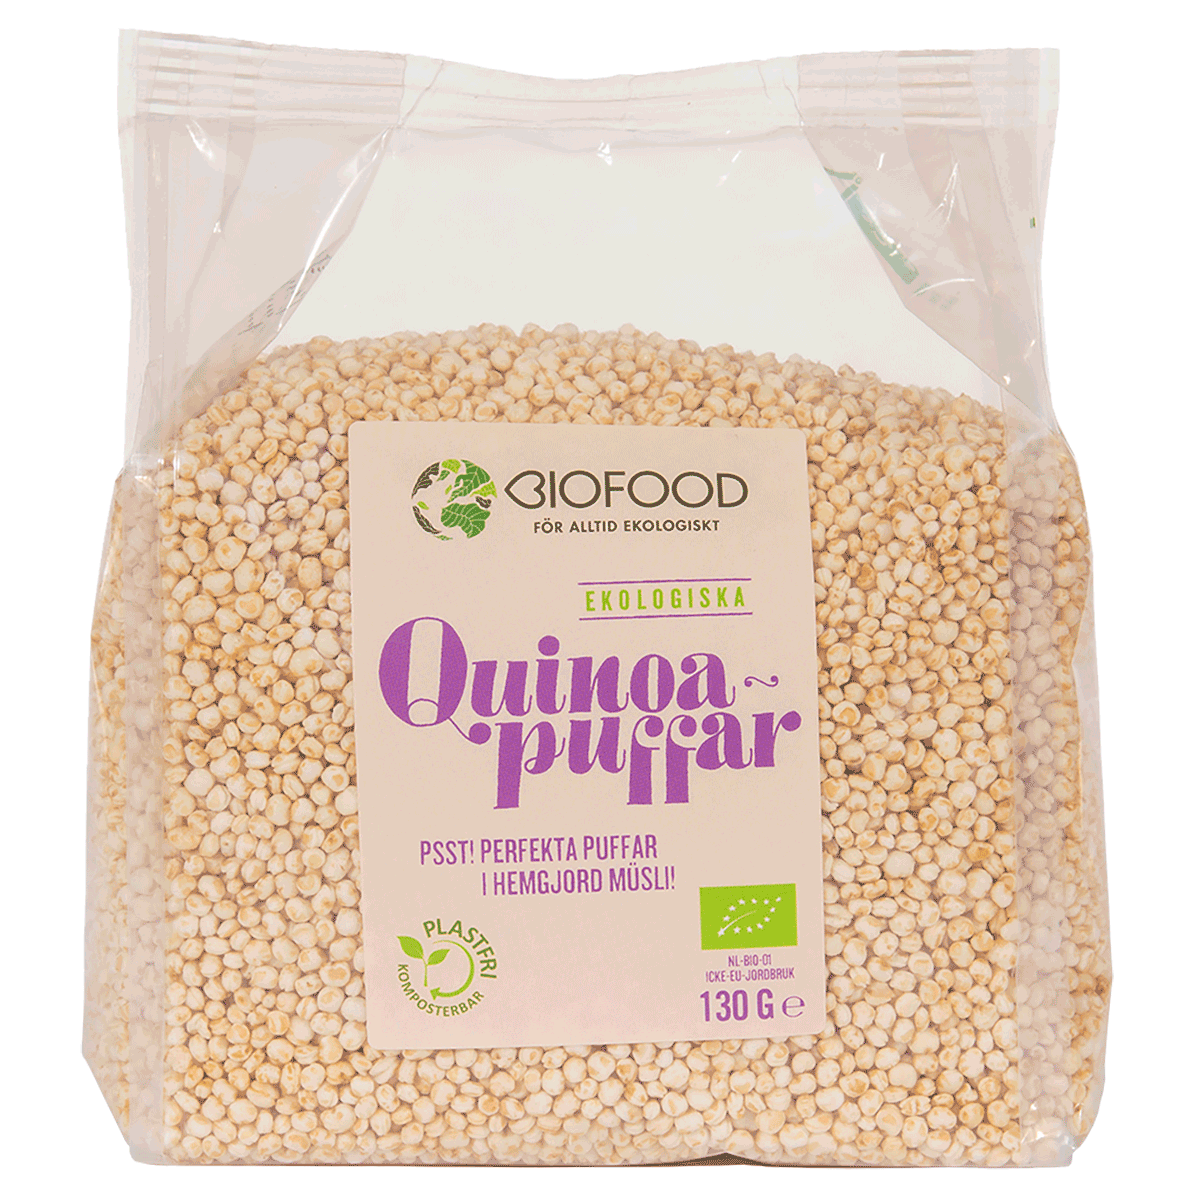 Quinoa-Puffs aus Biofood